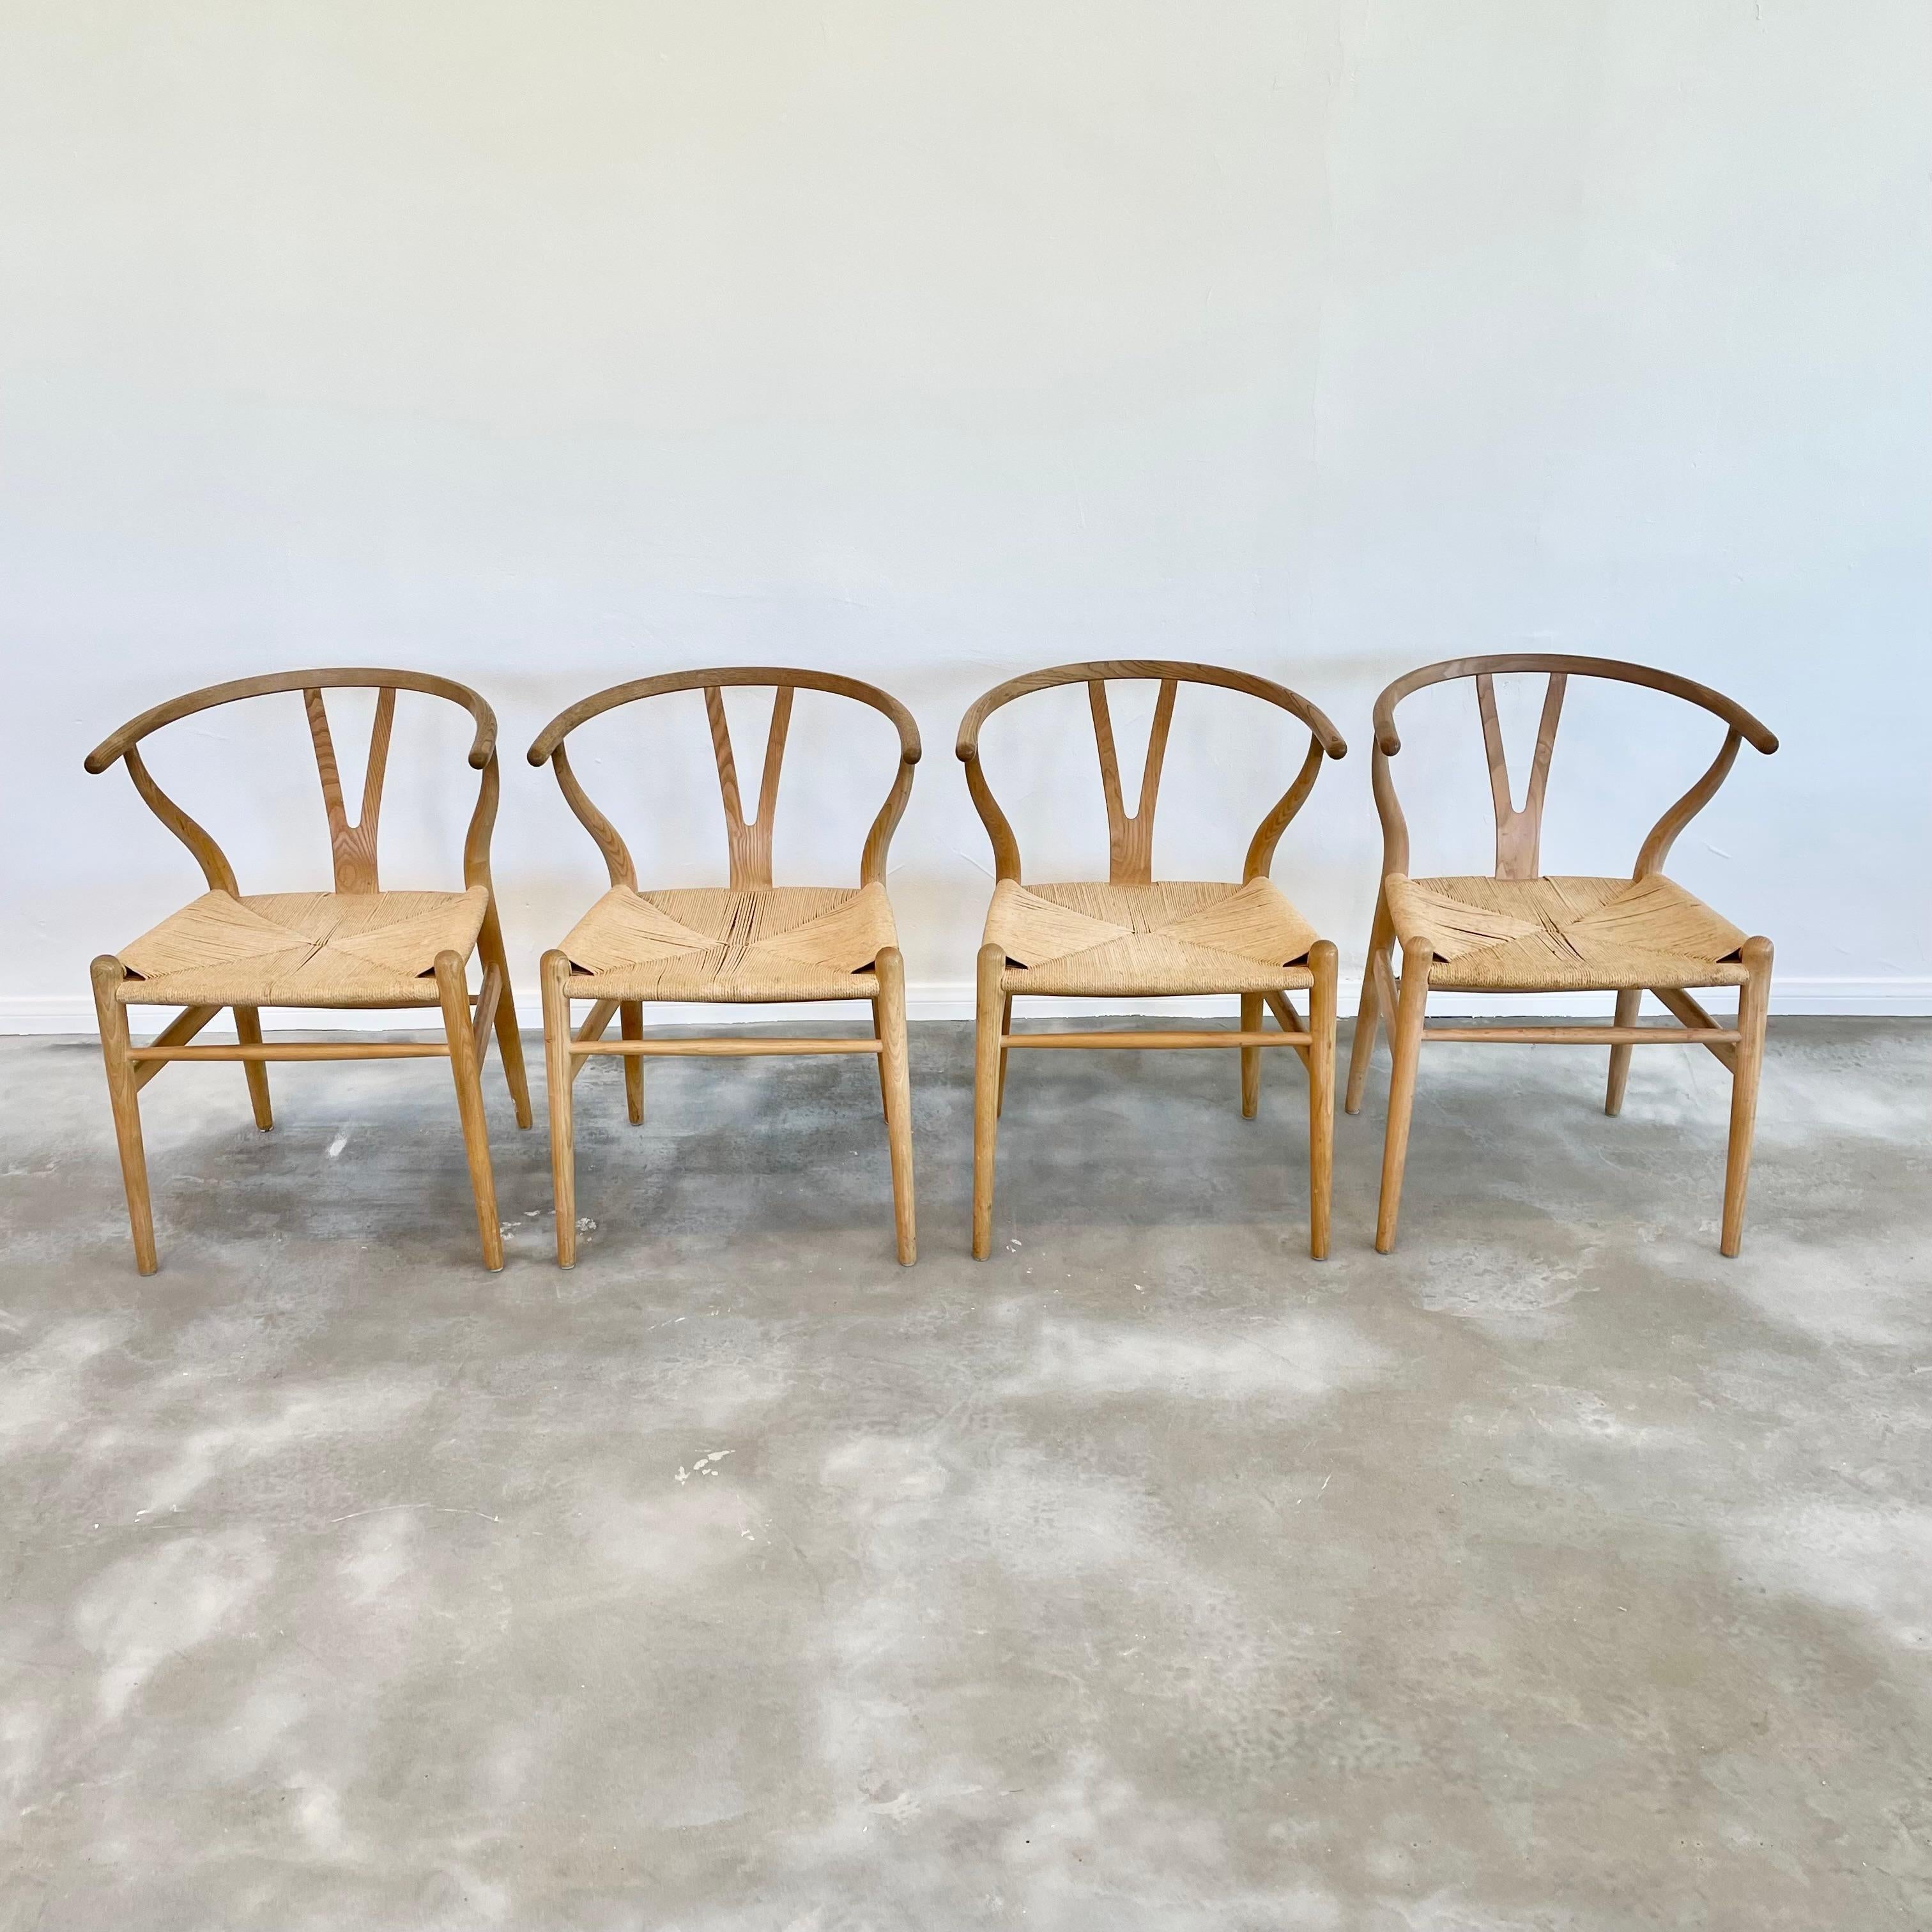 Danish Hans Wegner Wishbone chairs by Carl Hansen & Søn